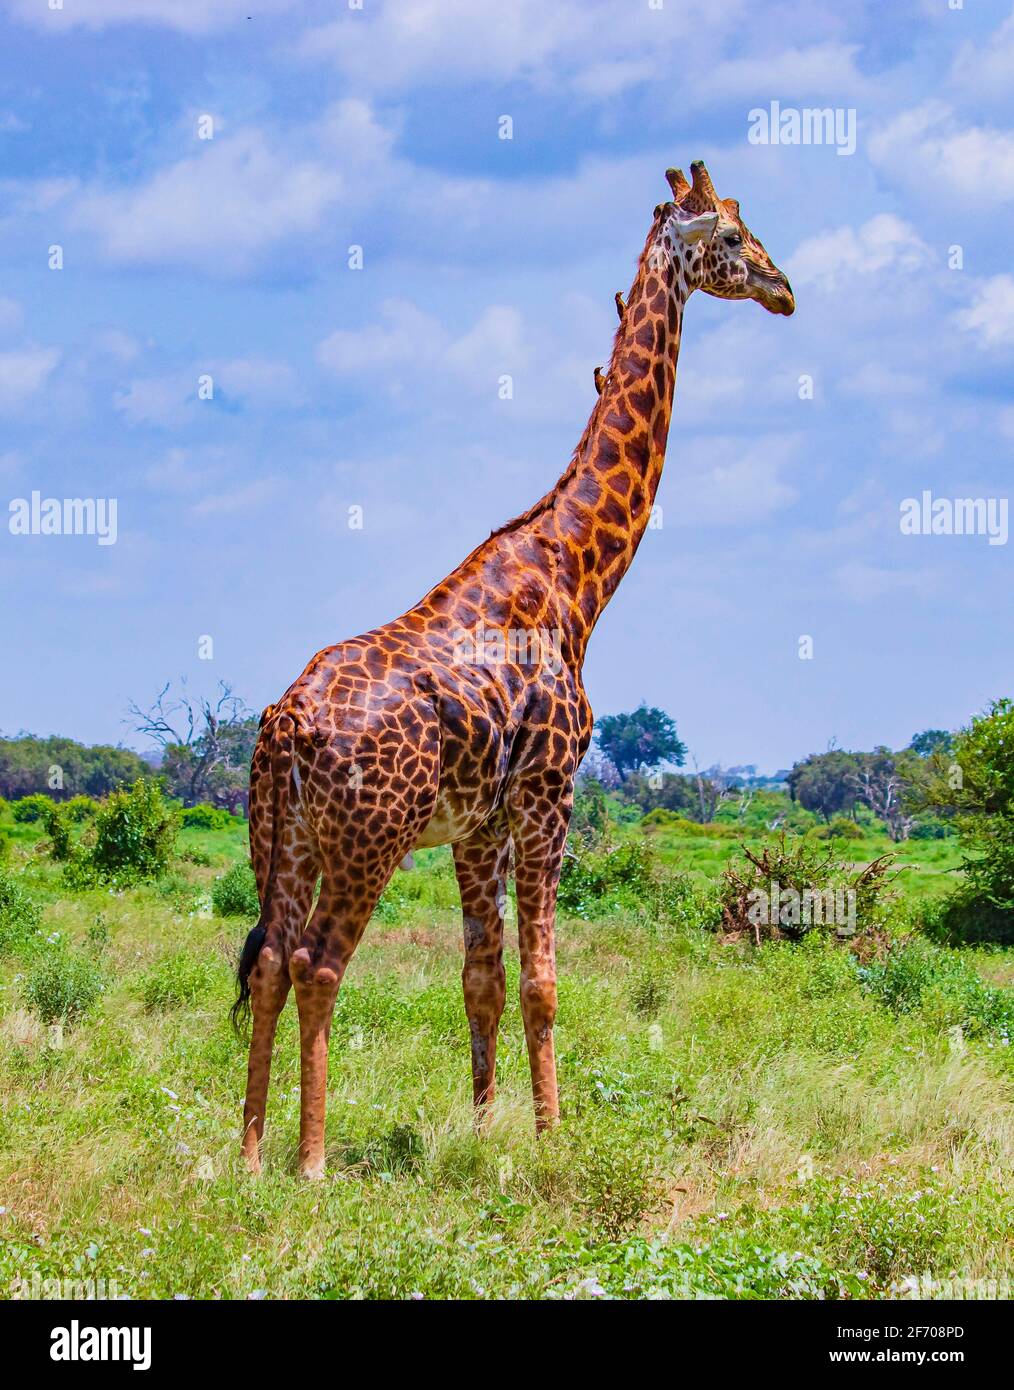 Giraffe in erba alta nel Parco Nazionale di Tsavo Est, Kenya. Uccelli seduti sul collo di una giraffa. È una foto di vita selvaggia. È una bella d Foto Stock